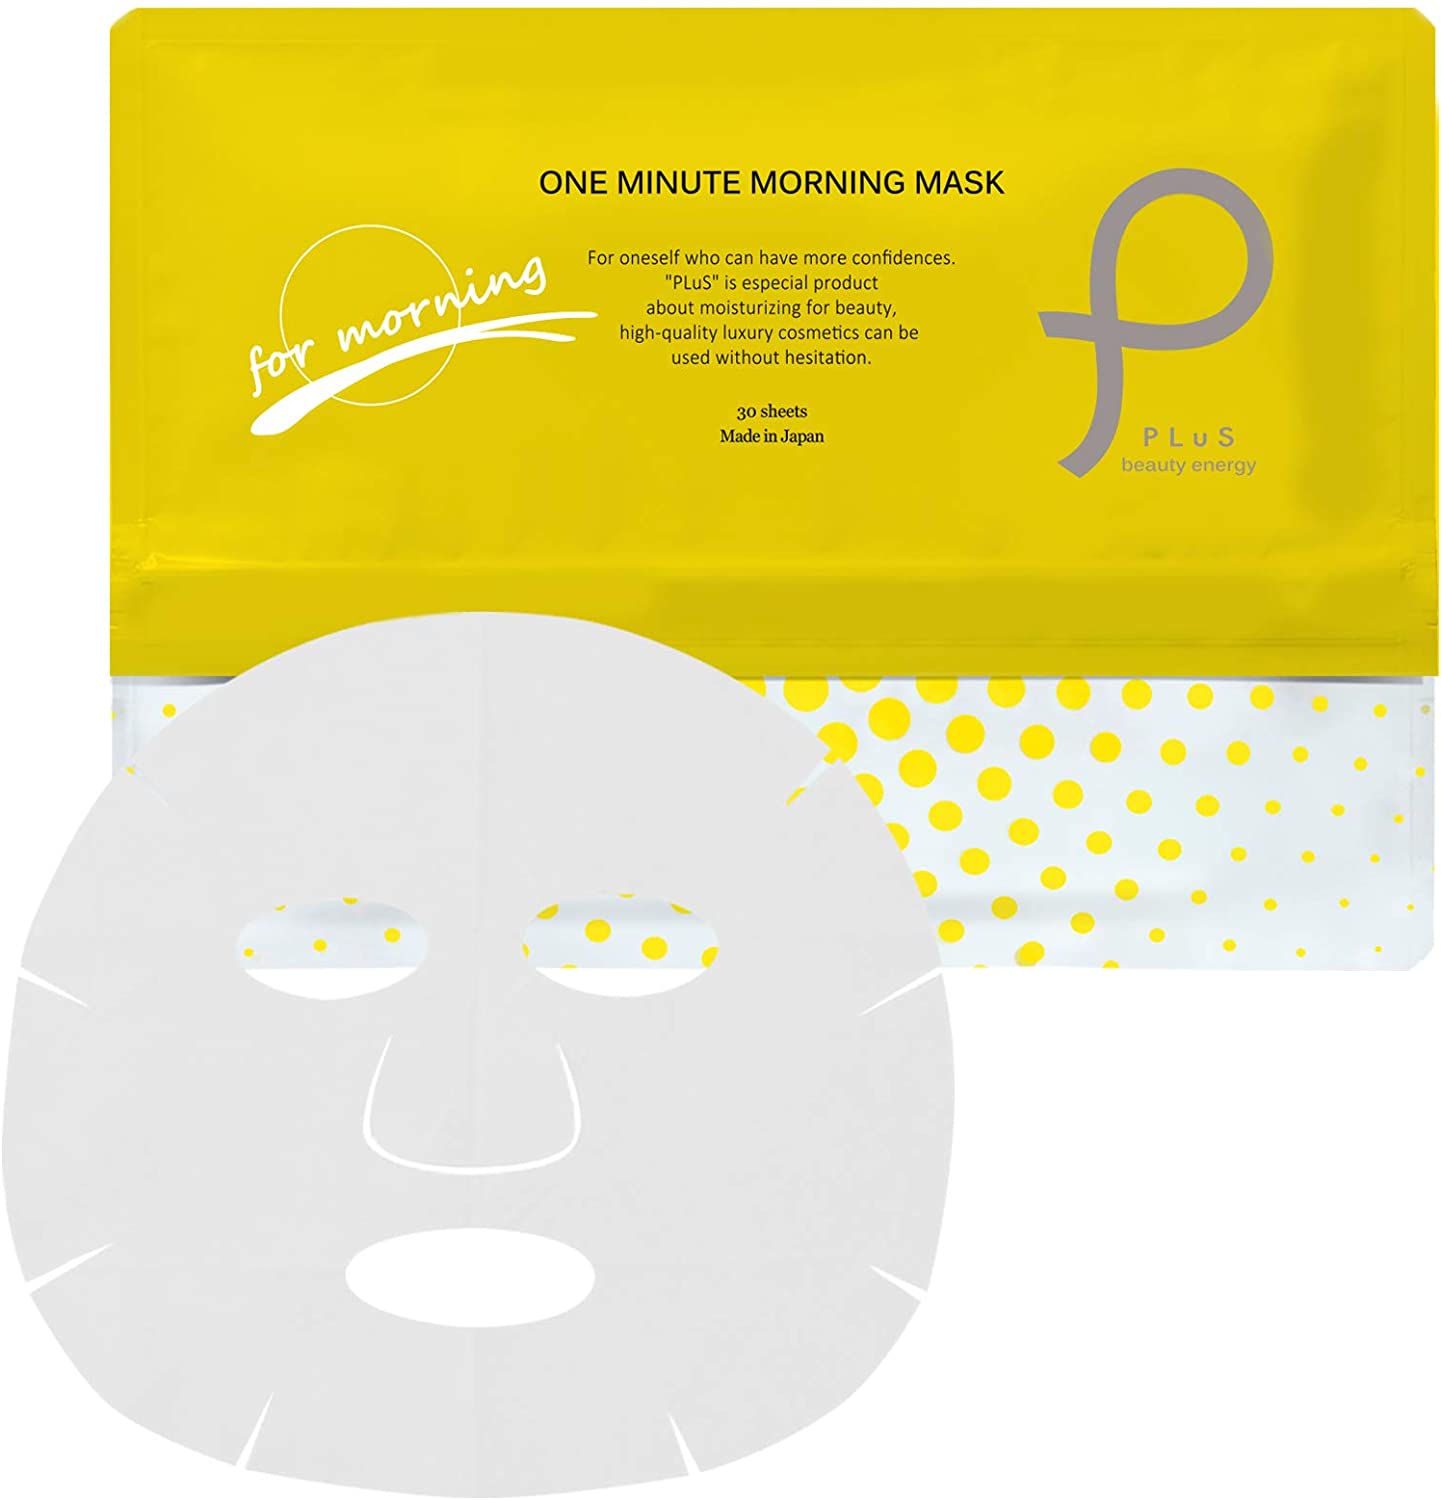 Утренняя маска для лица “Уход за 1 минуту” PLuS One Minute Morning Mask, 30 листов